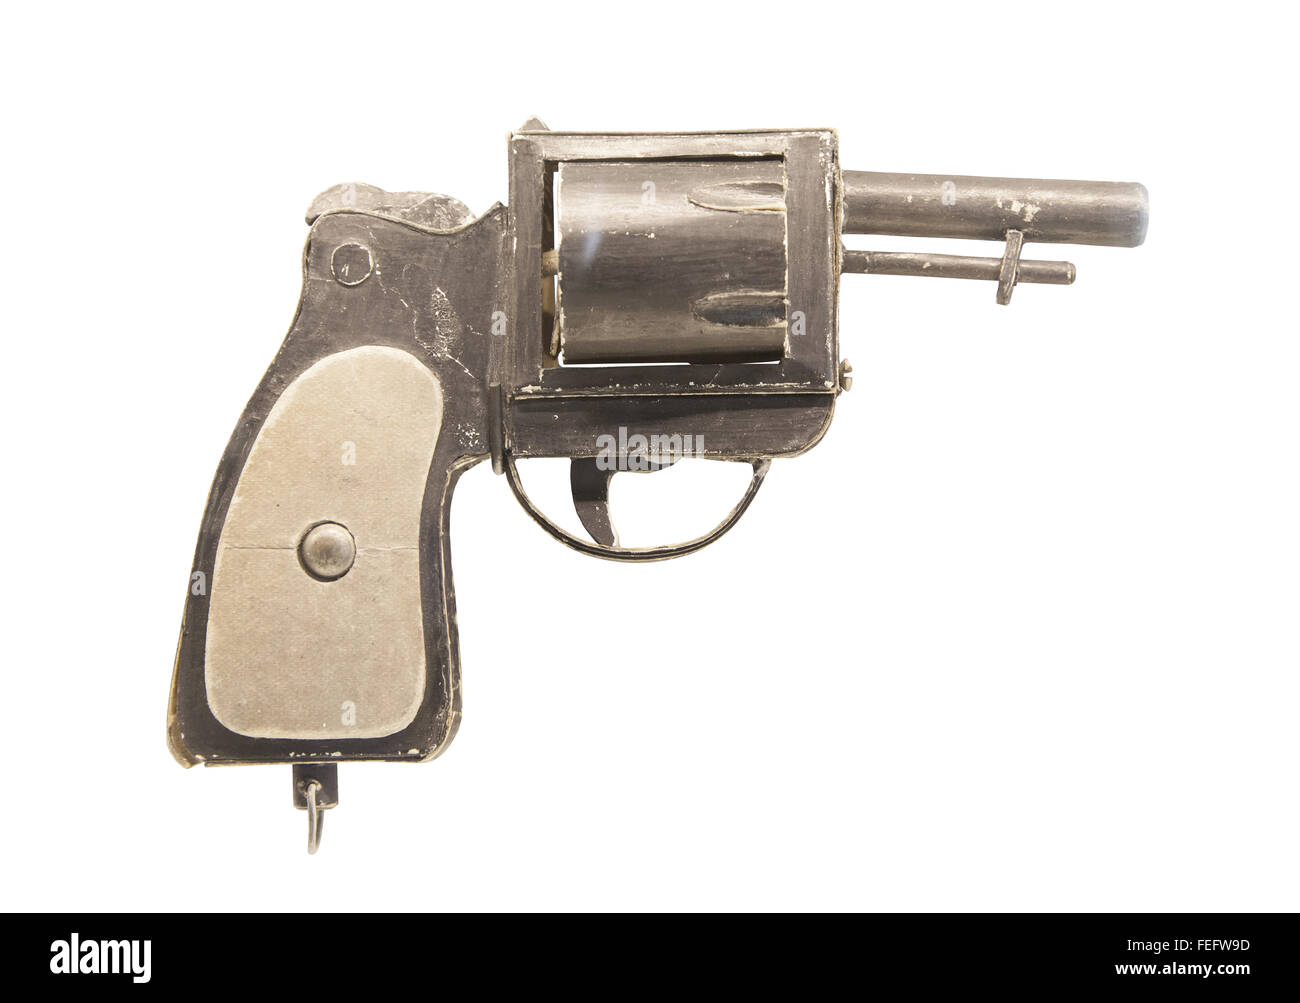 Home made fake gun isolated on white Stock Photo